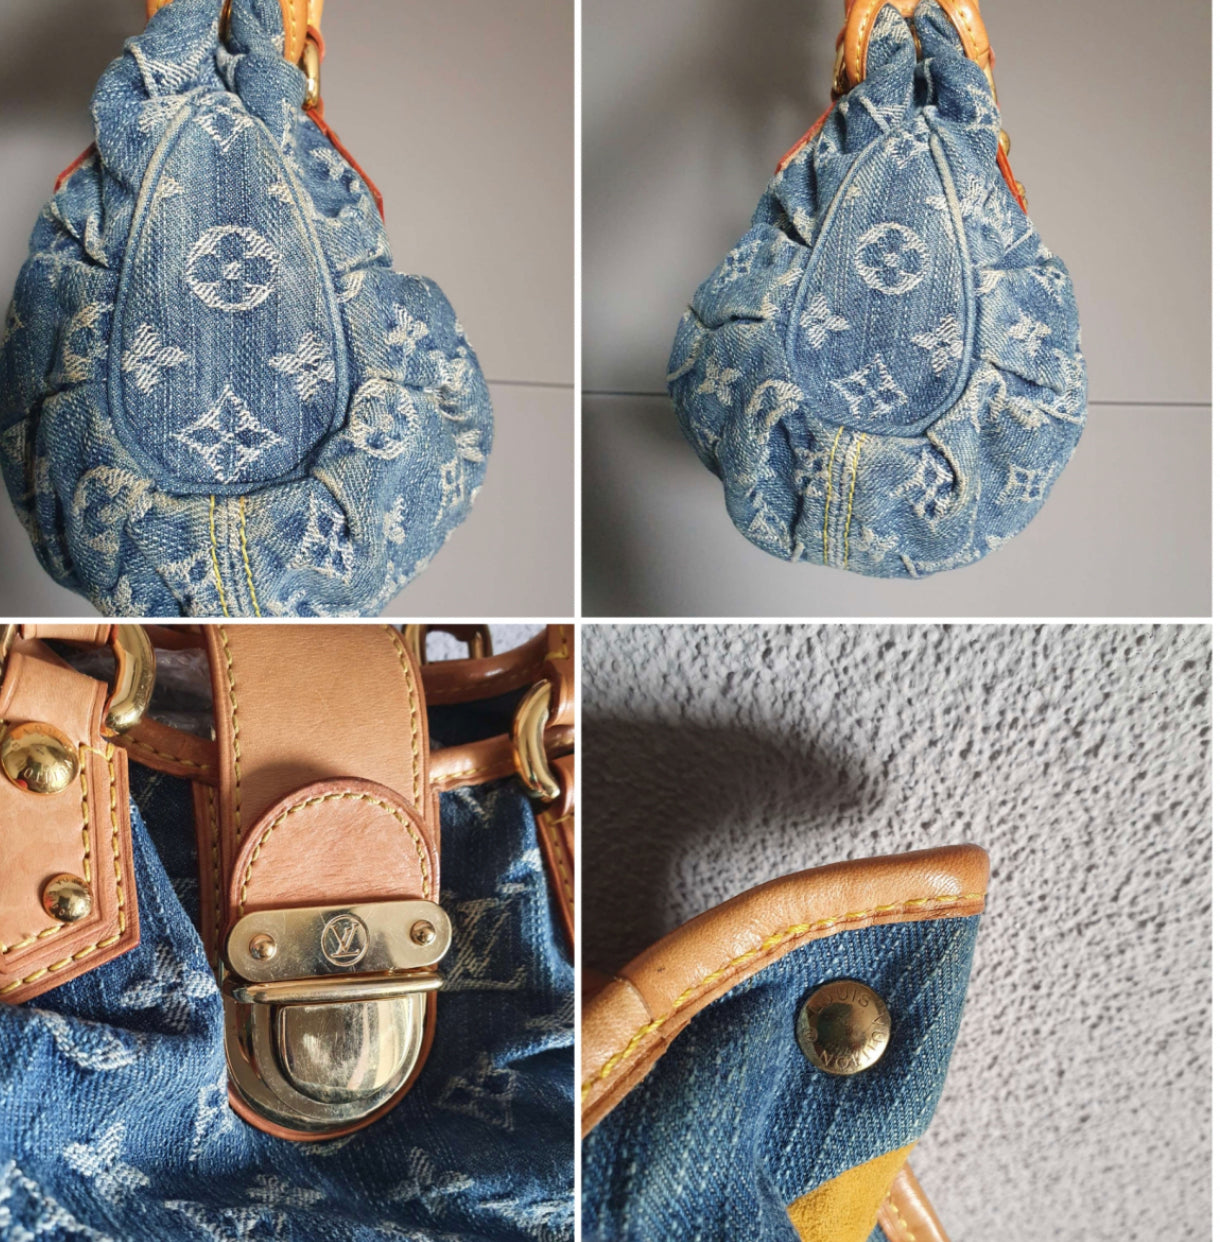 Louis Vuitton platty denim mini handbag